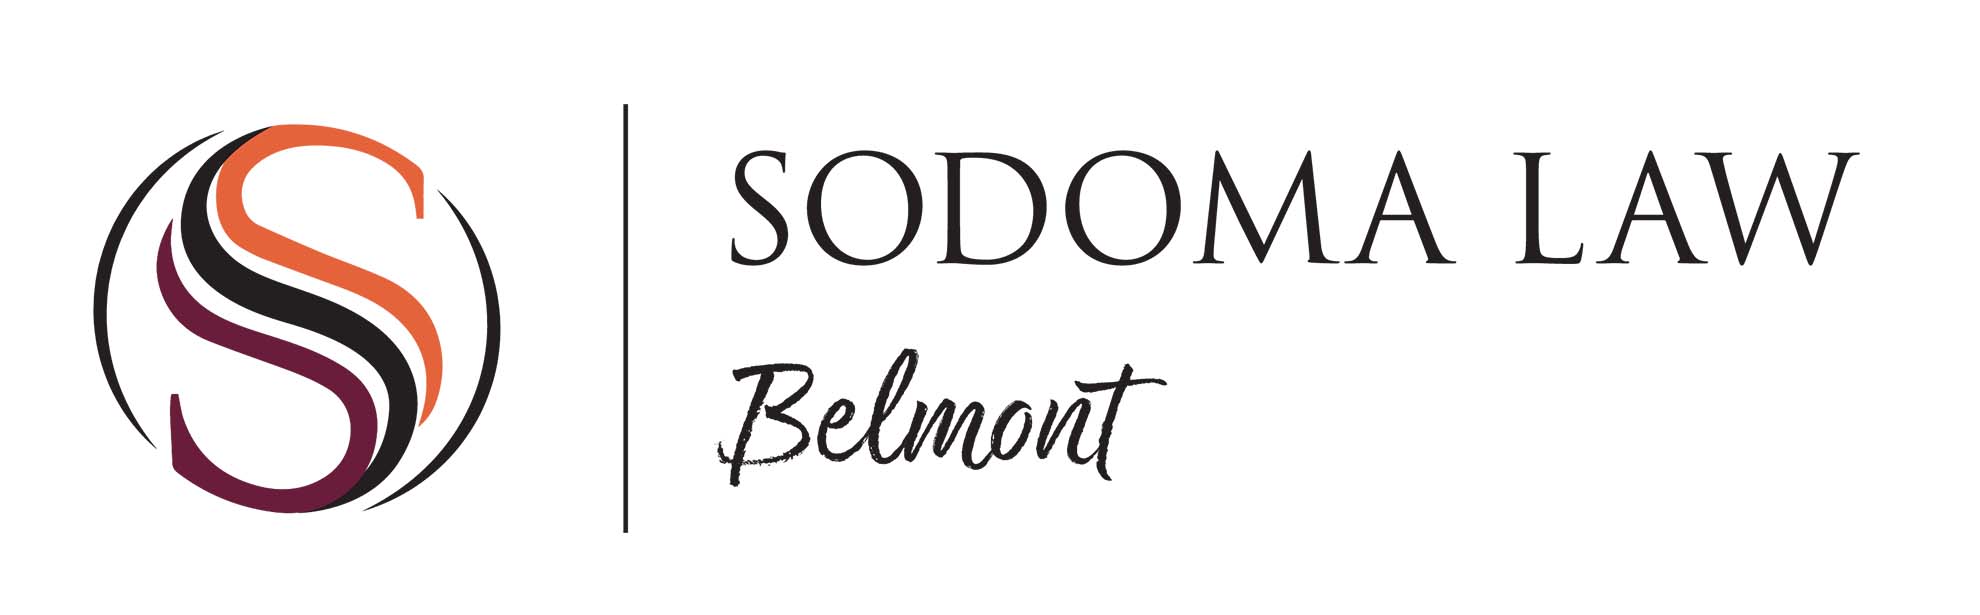 Sodoma Law Belmont logo